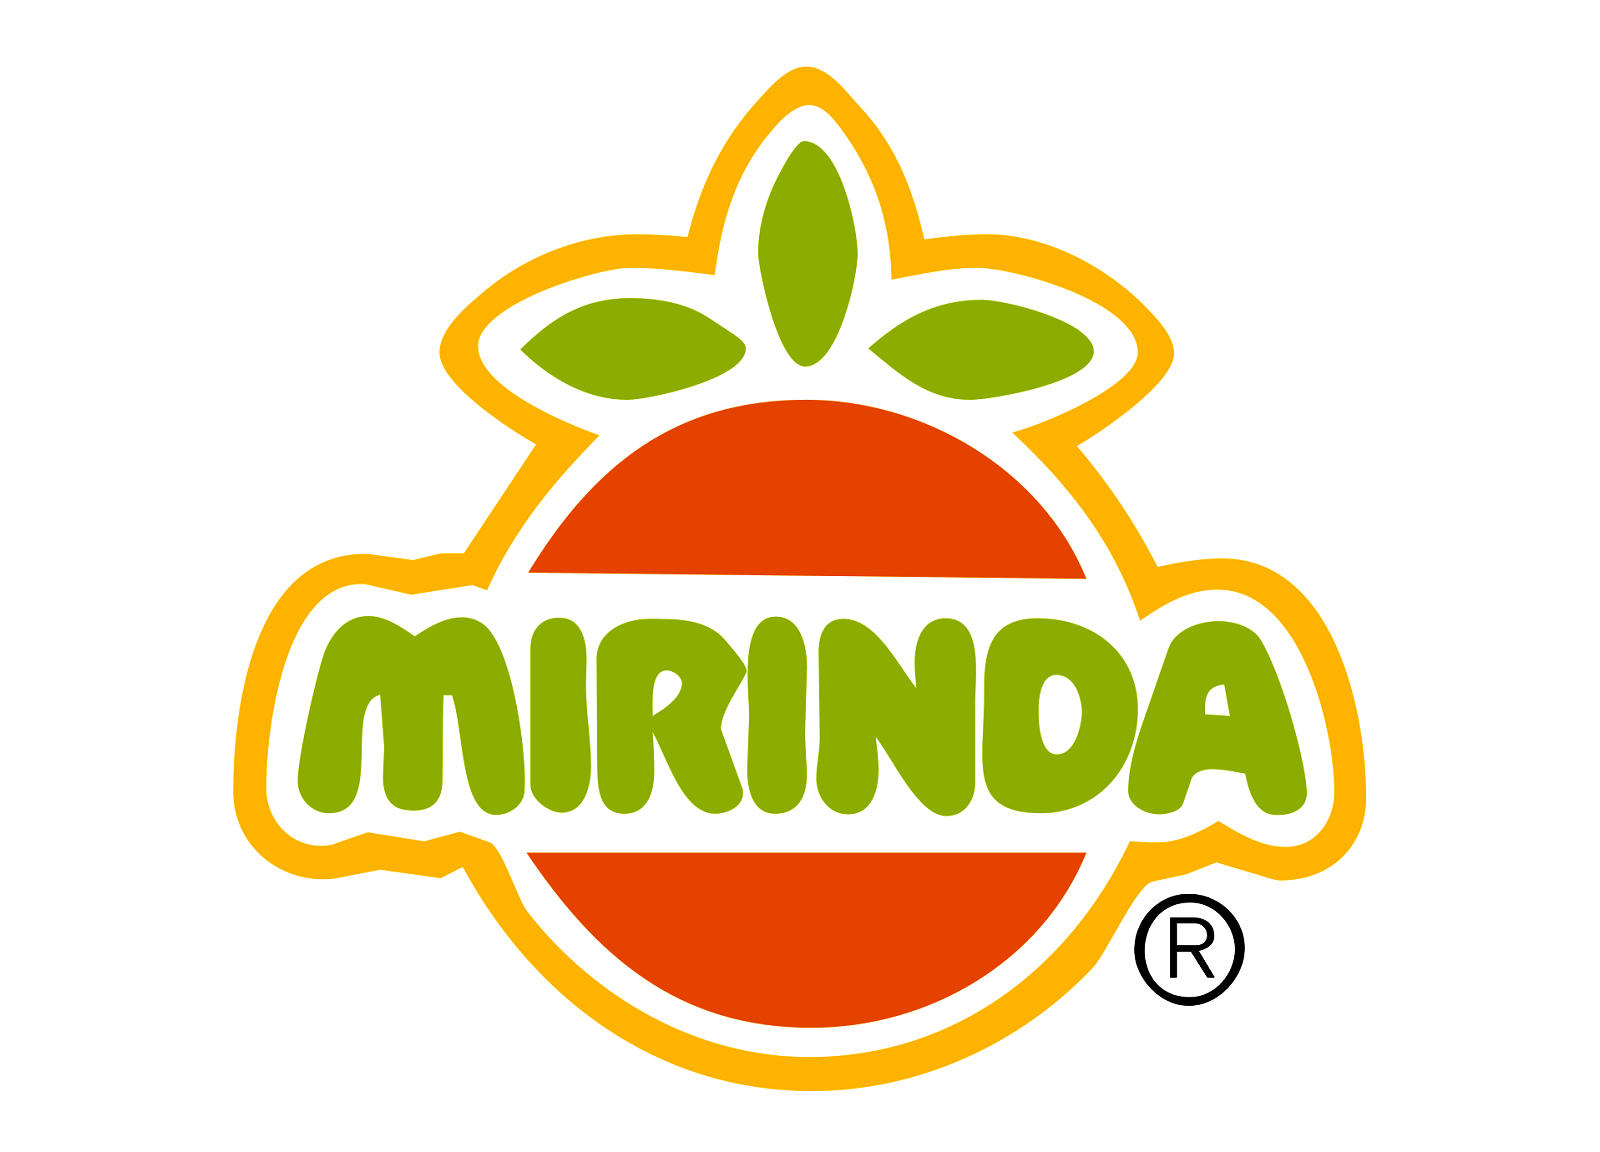 Mirinda Logo - Image - Mirinda-logo (1).png | Logopedia | FANDOM powered by Wikia